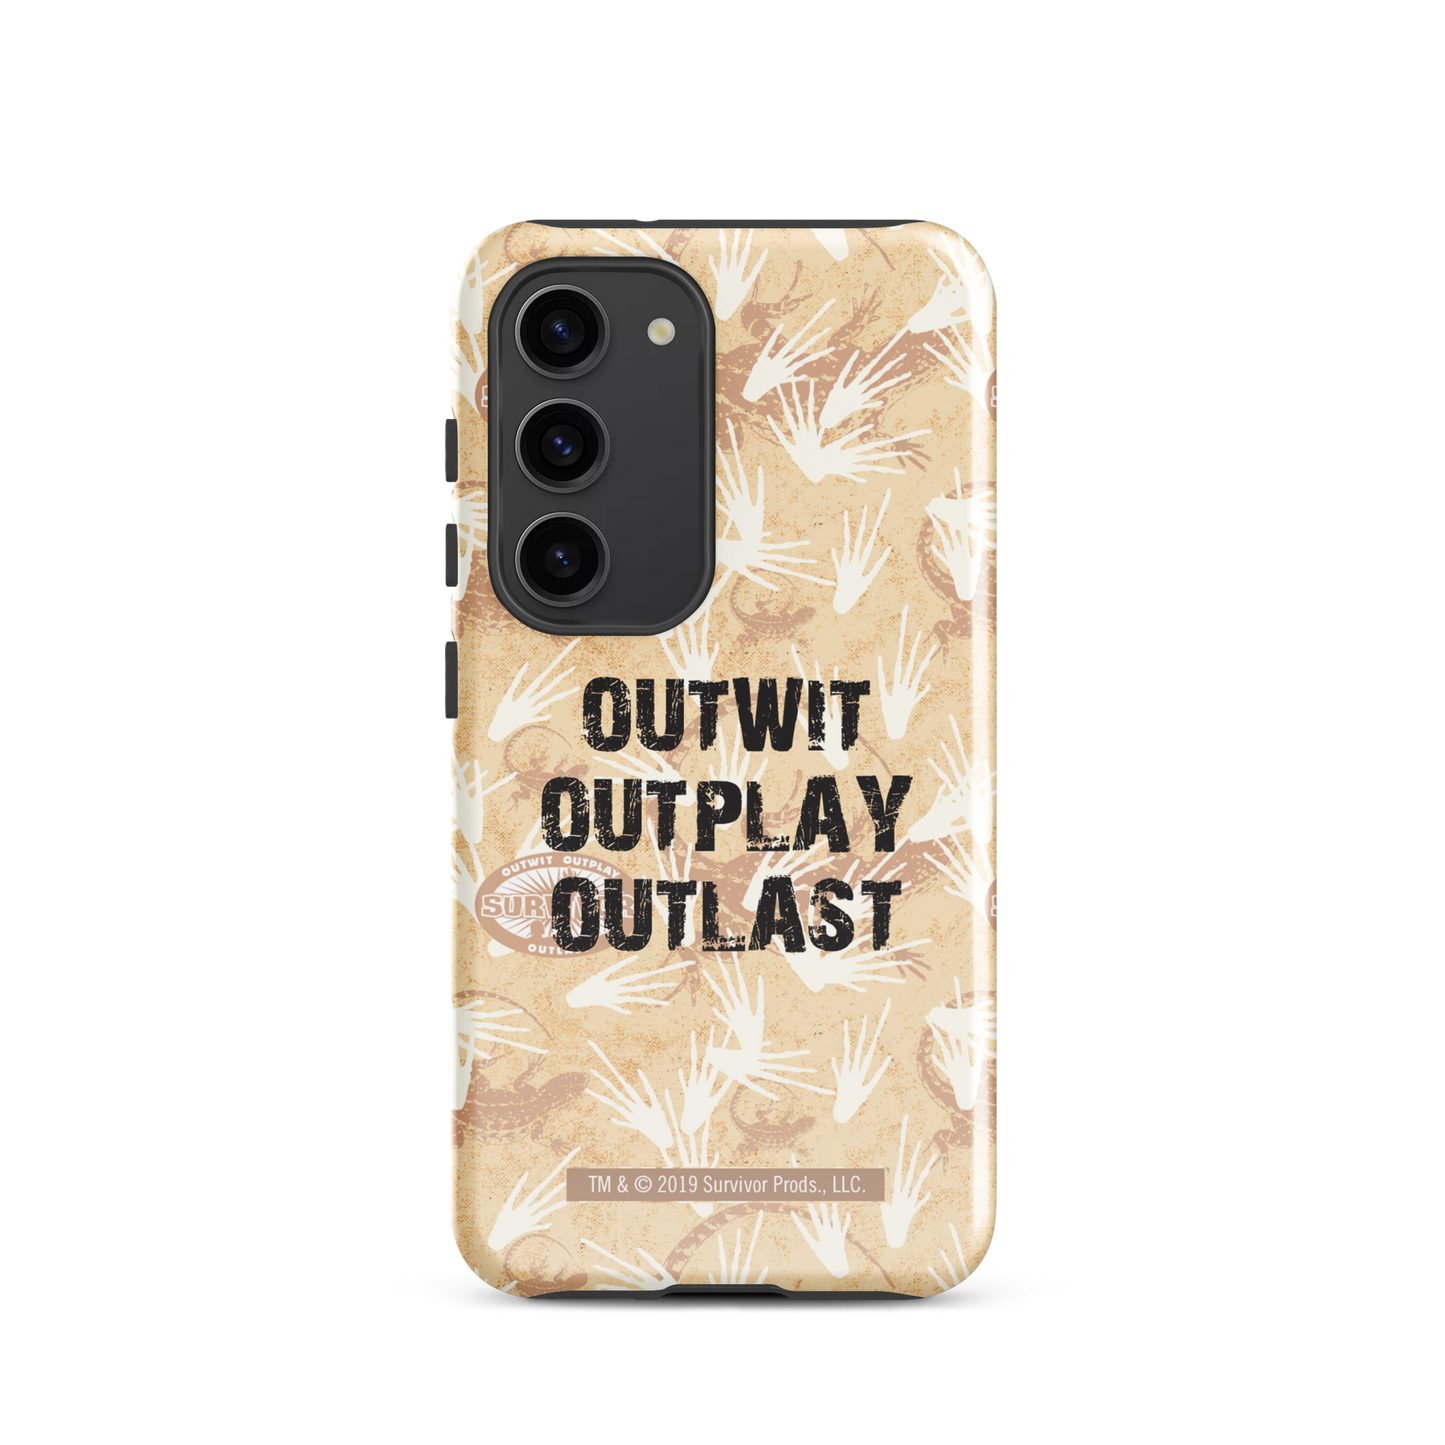 Survivor Outwit, Outplay, Outlast Robuste Handyhülle - Samsung